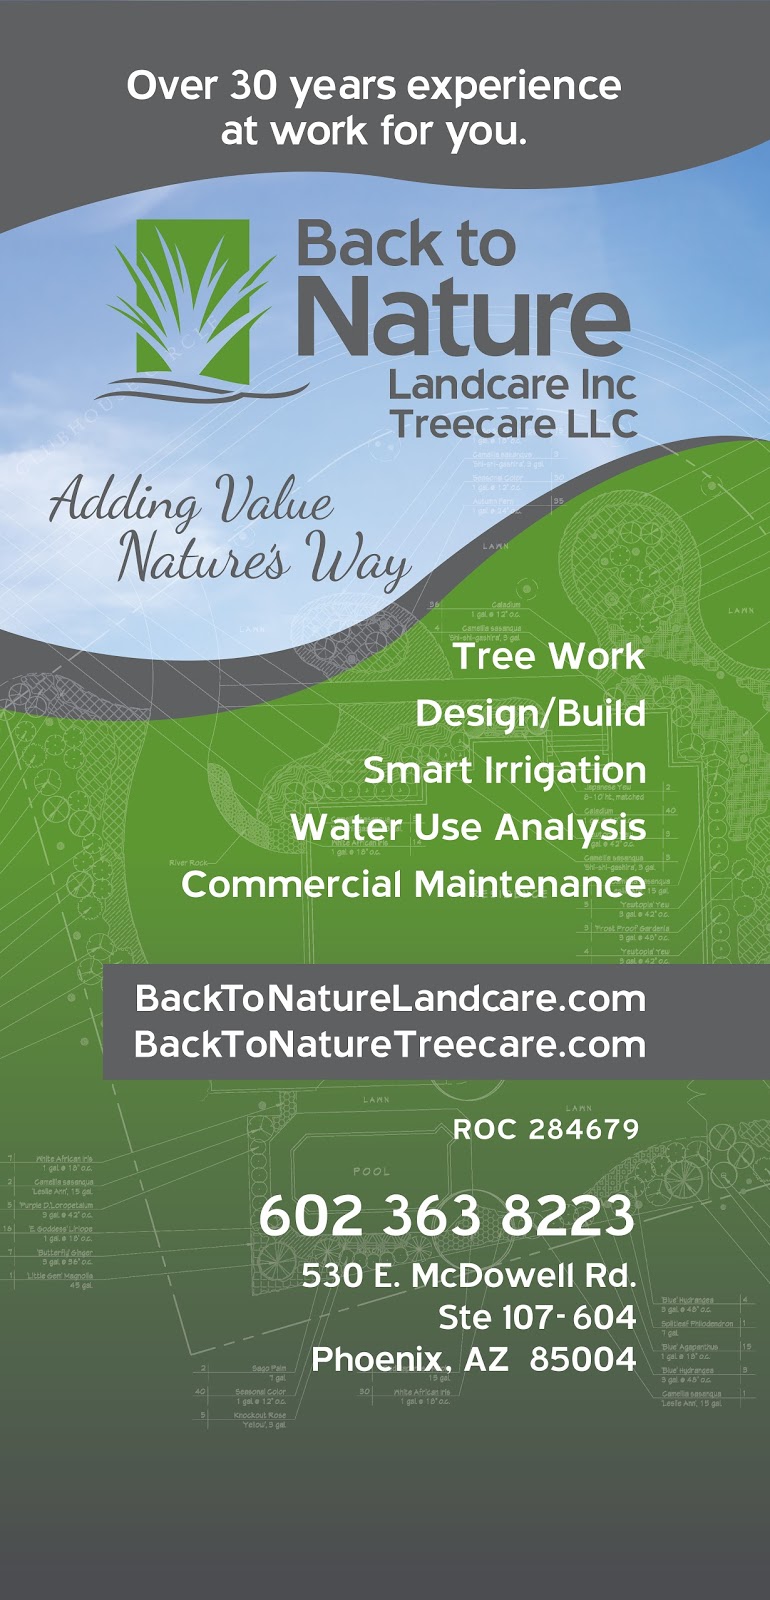 Back to Nature Landcare & Treecare